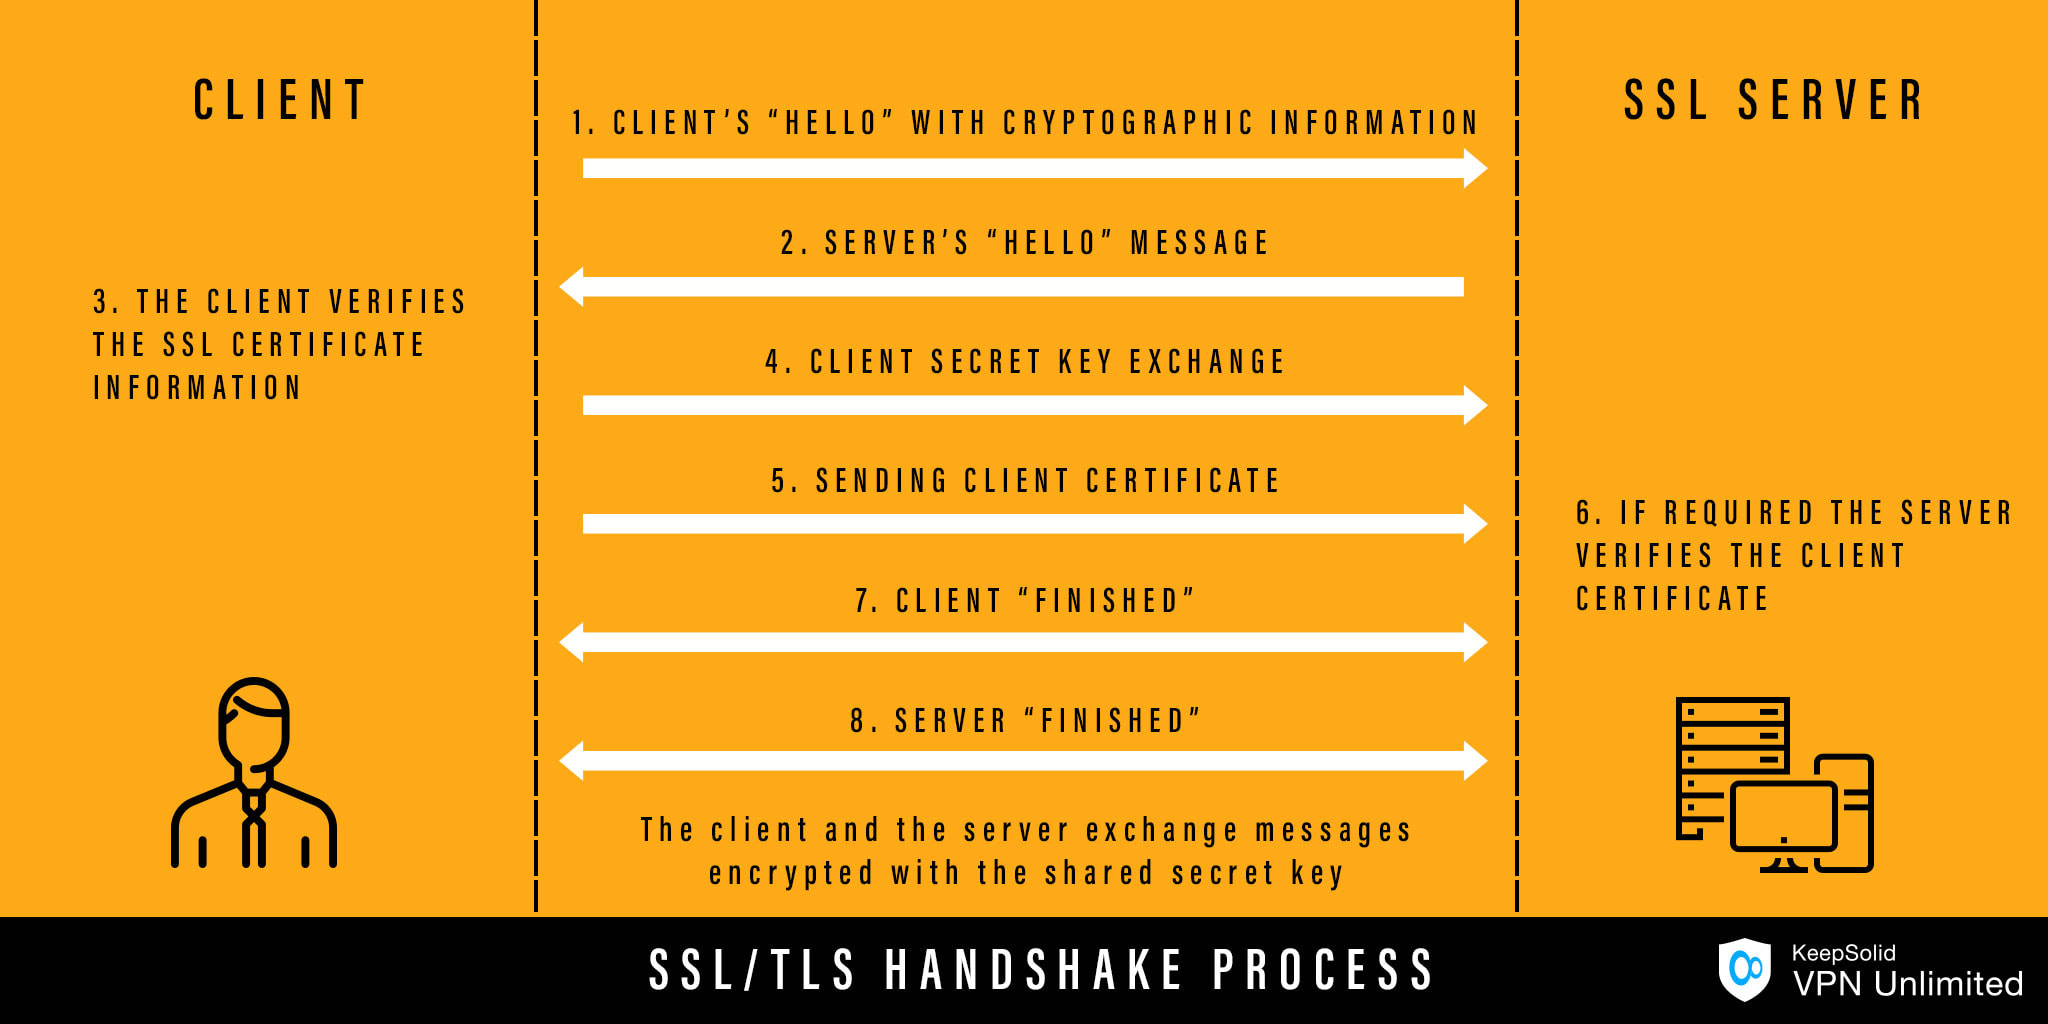 Table demonstrating steps of SSL/TLS handshake